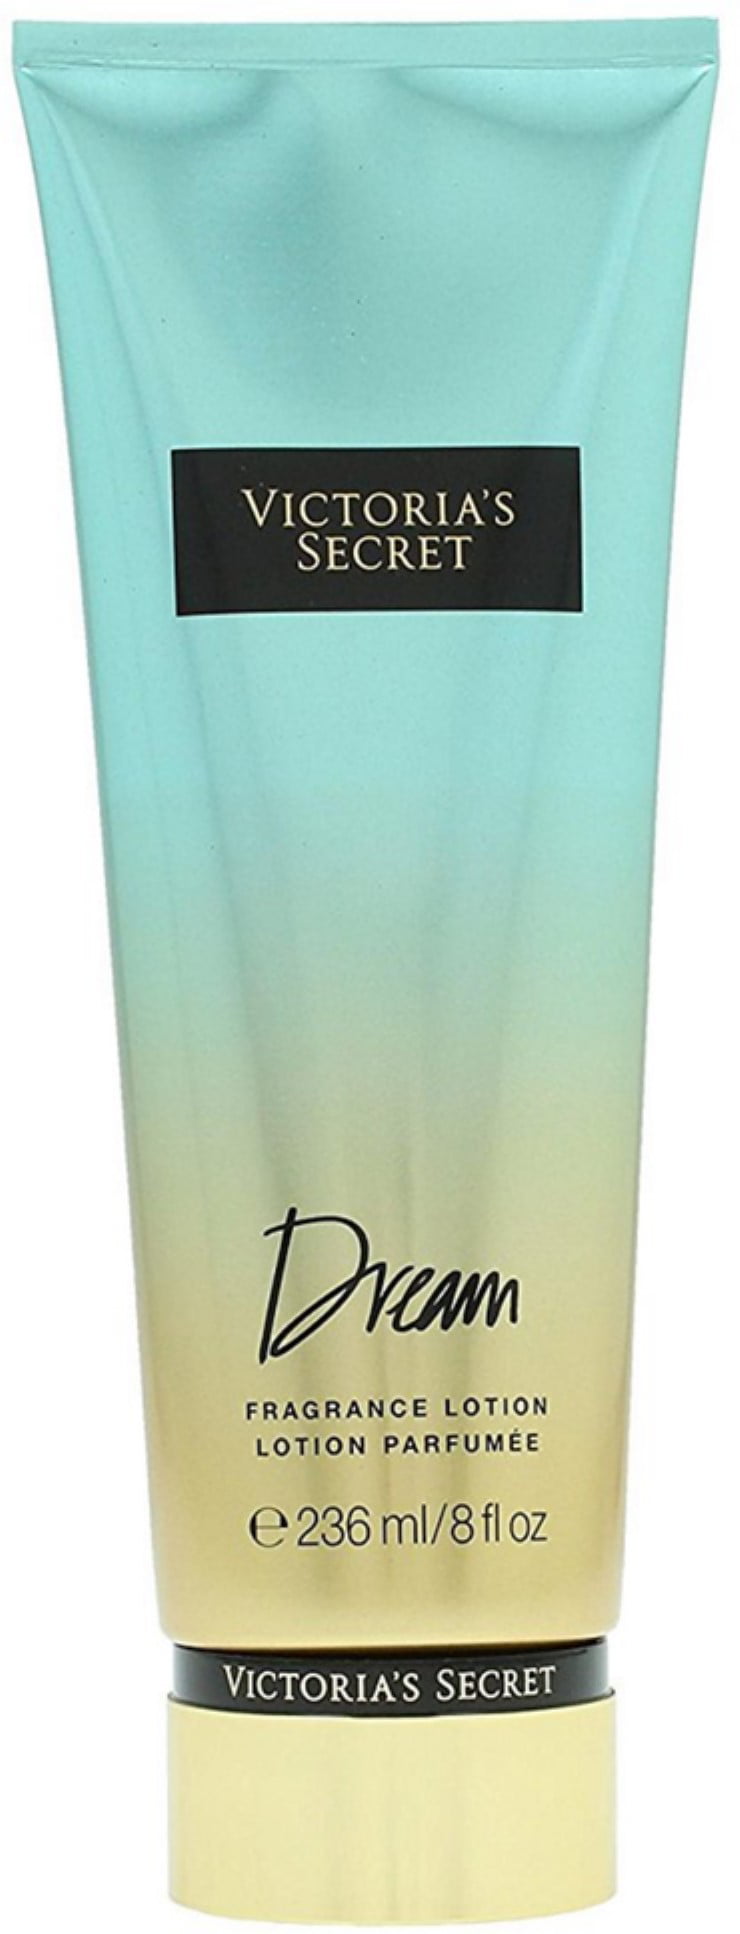 Victoria's Secret Fantasies Fragrance Lotion, Dream 8 oz